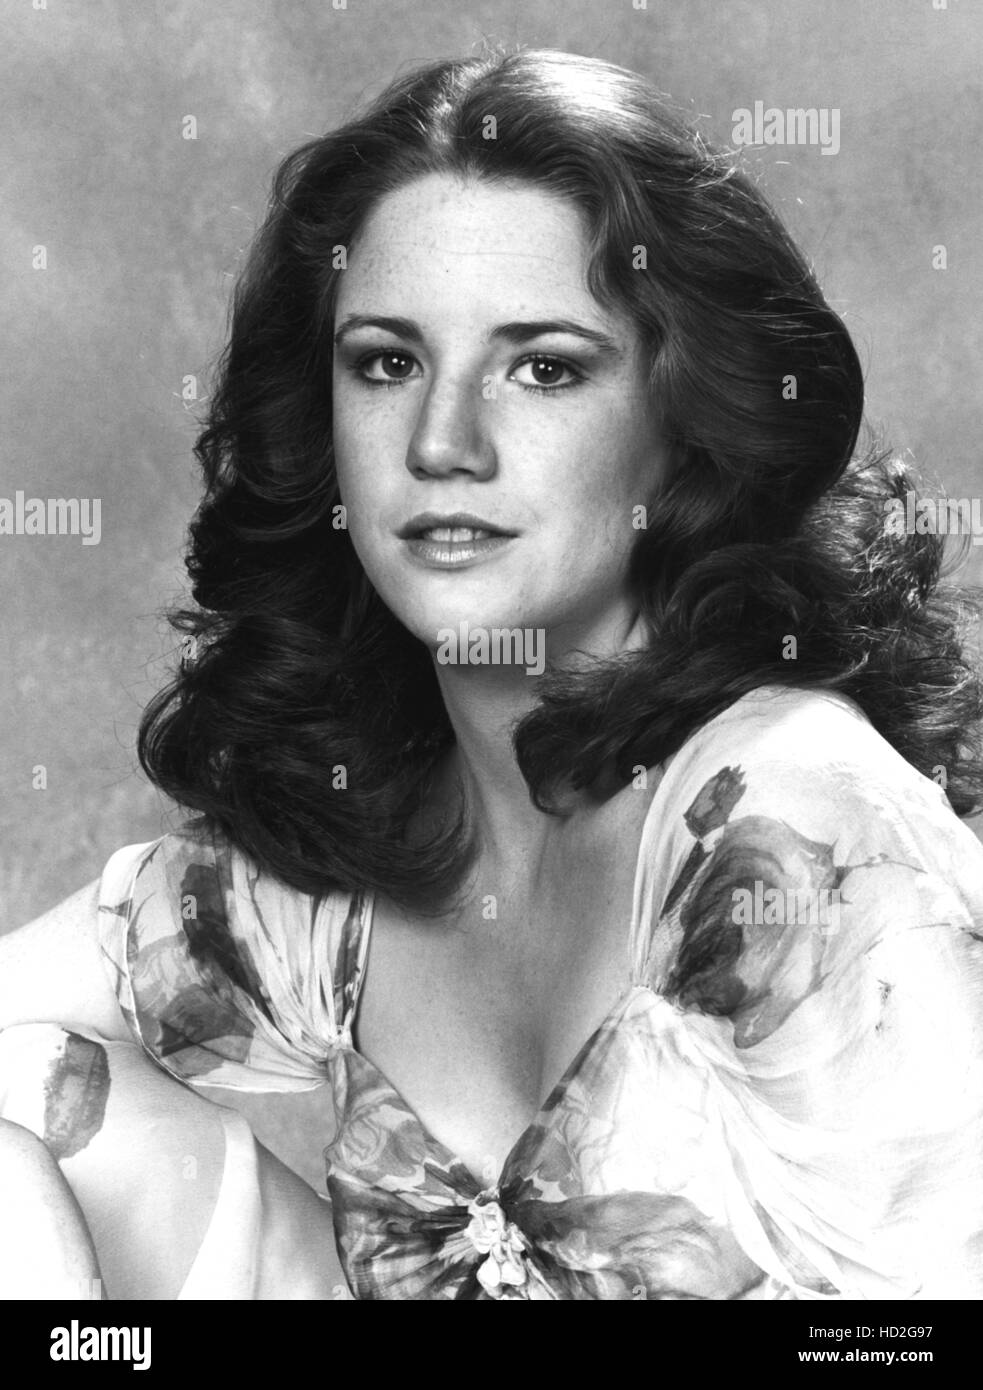 Melissa Gilbert Porträt ca. 1981 Stockfotografie - Alamy